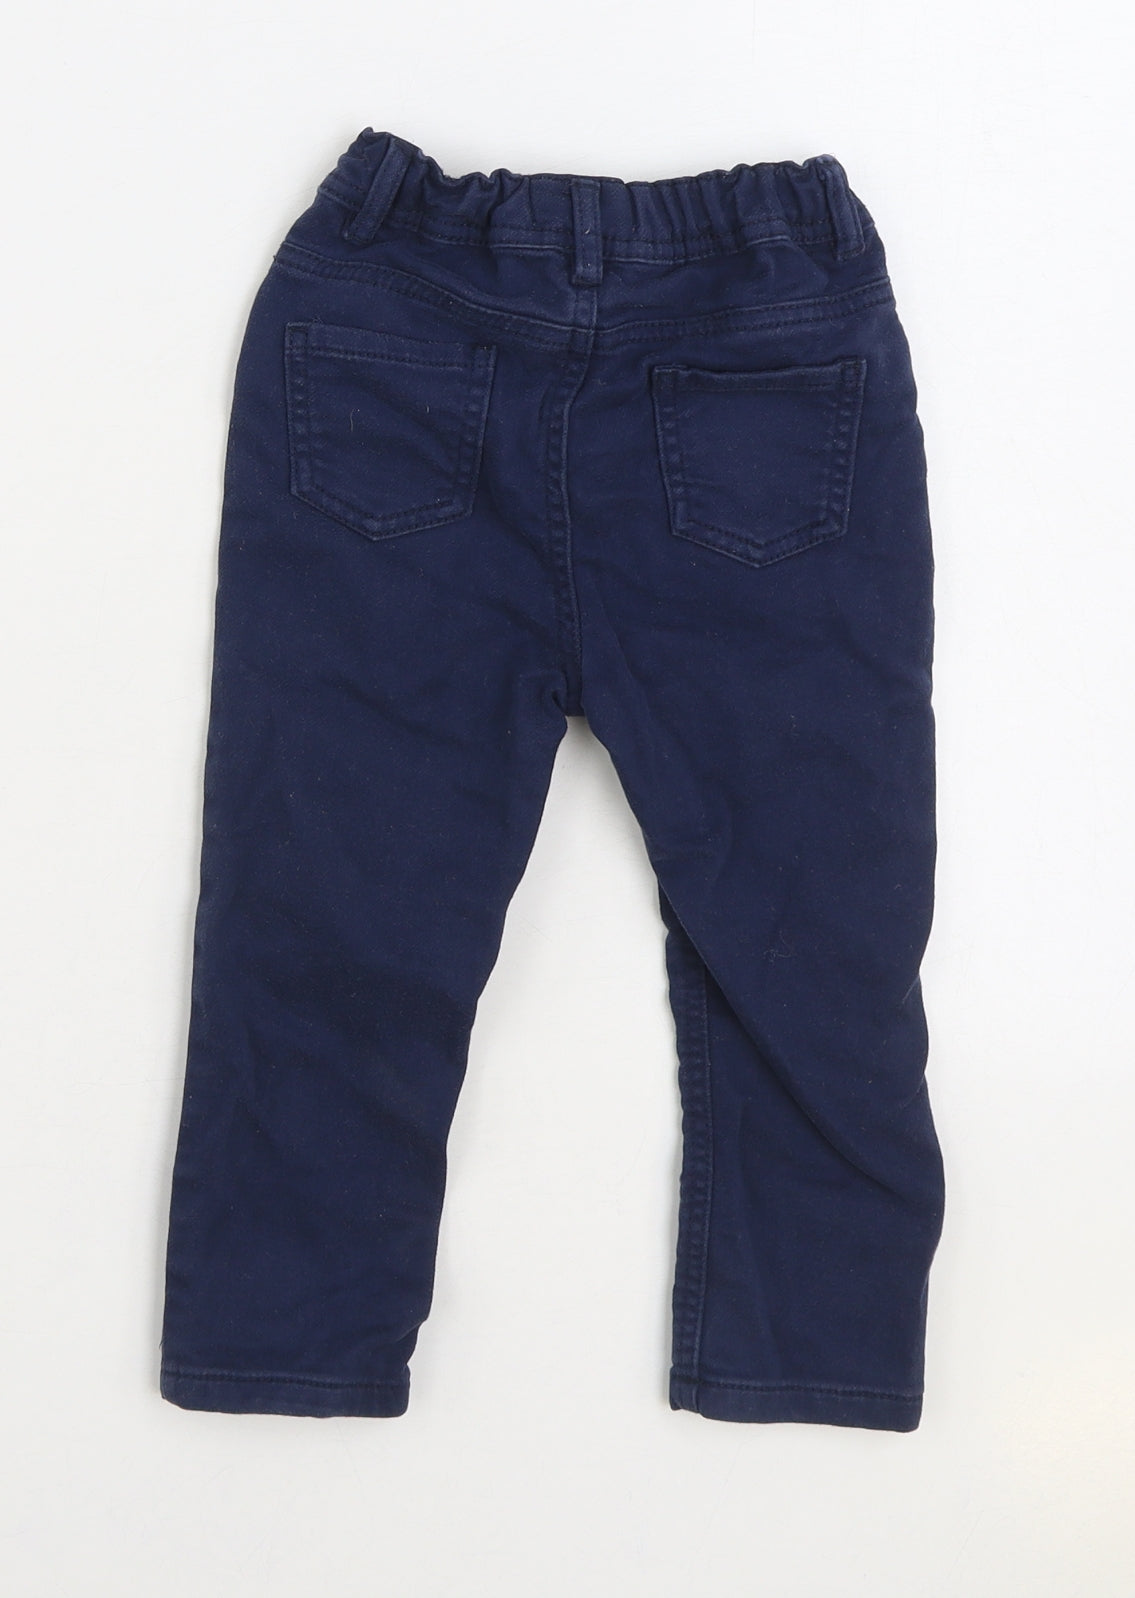 Primark Boys Blue Cotton Straight Jeans Size 2-3 Years Regular Button